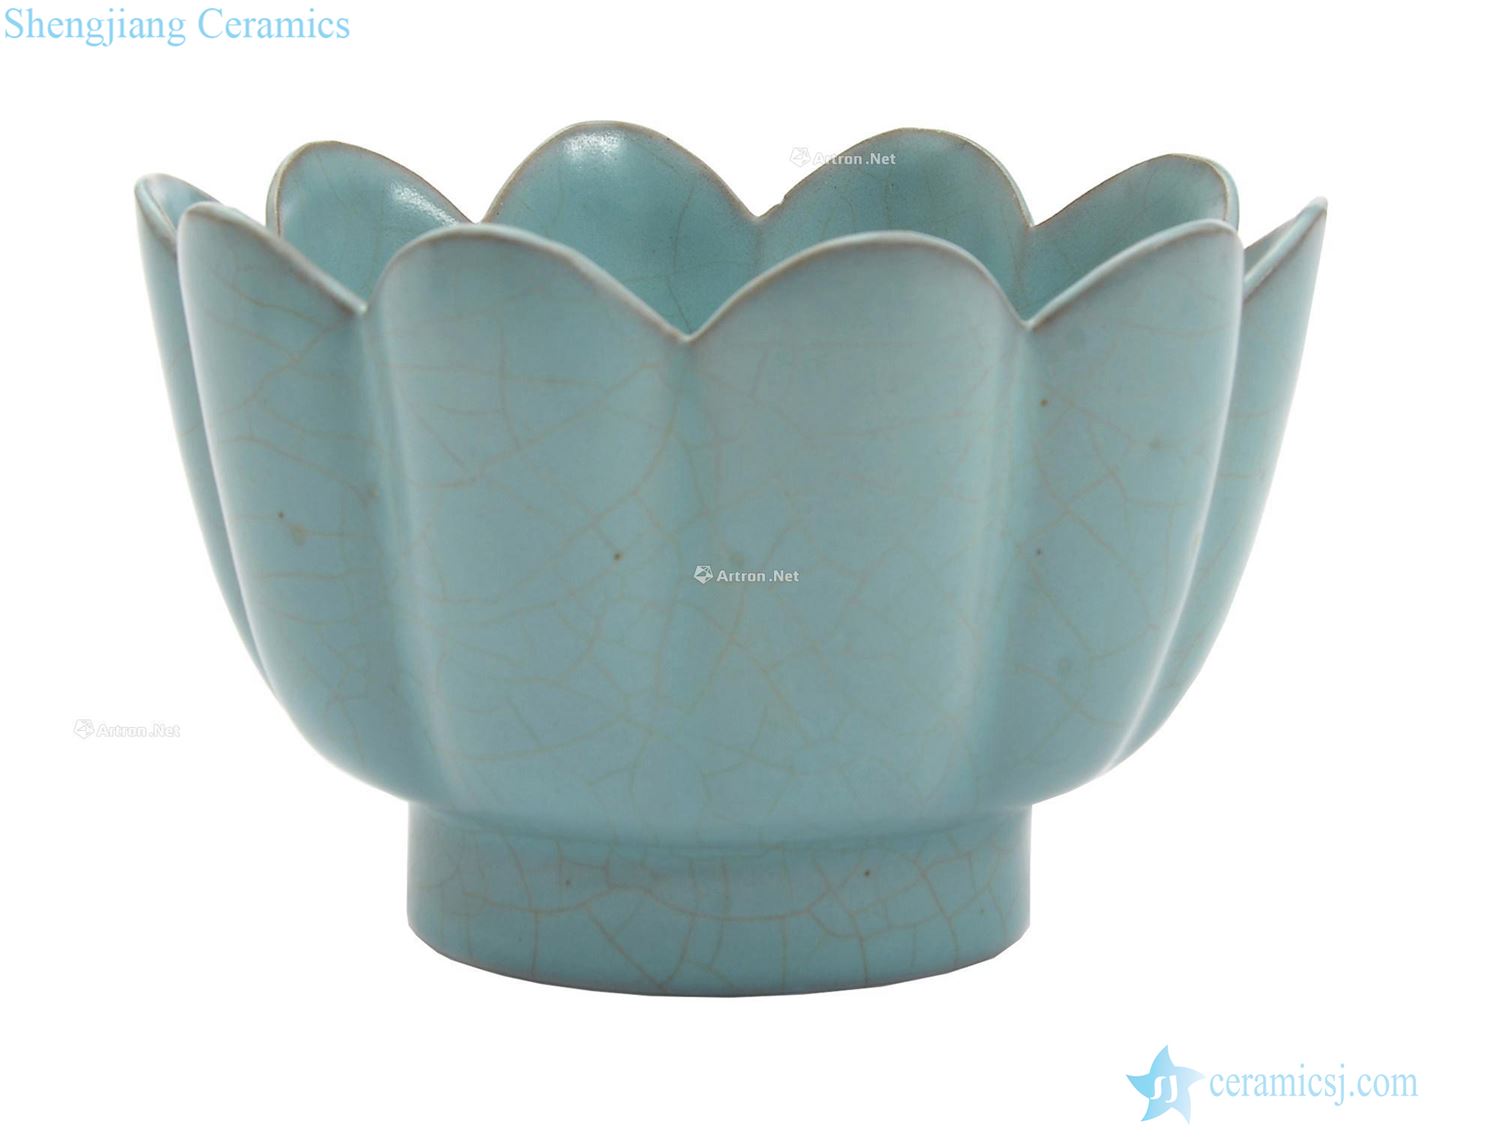 Your kiln lotus-shaped bowl